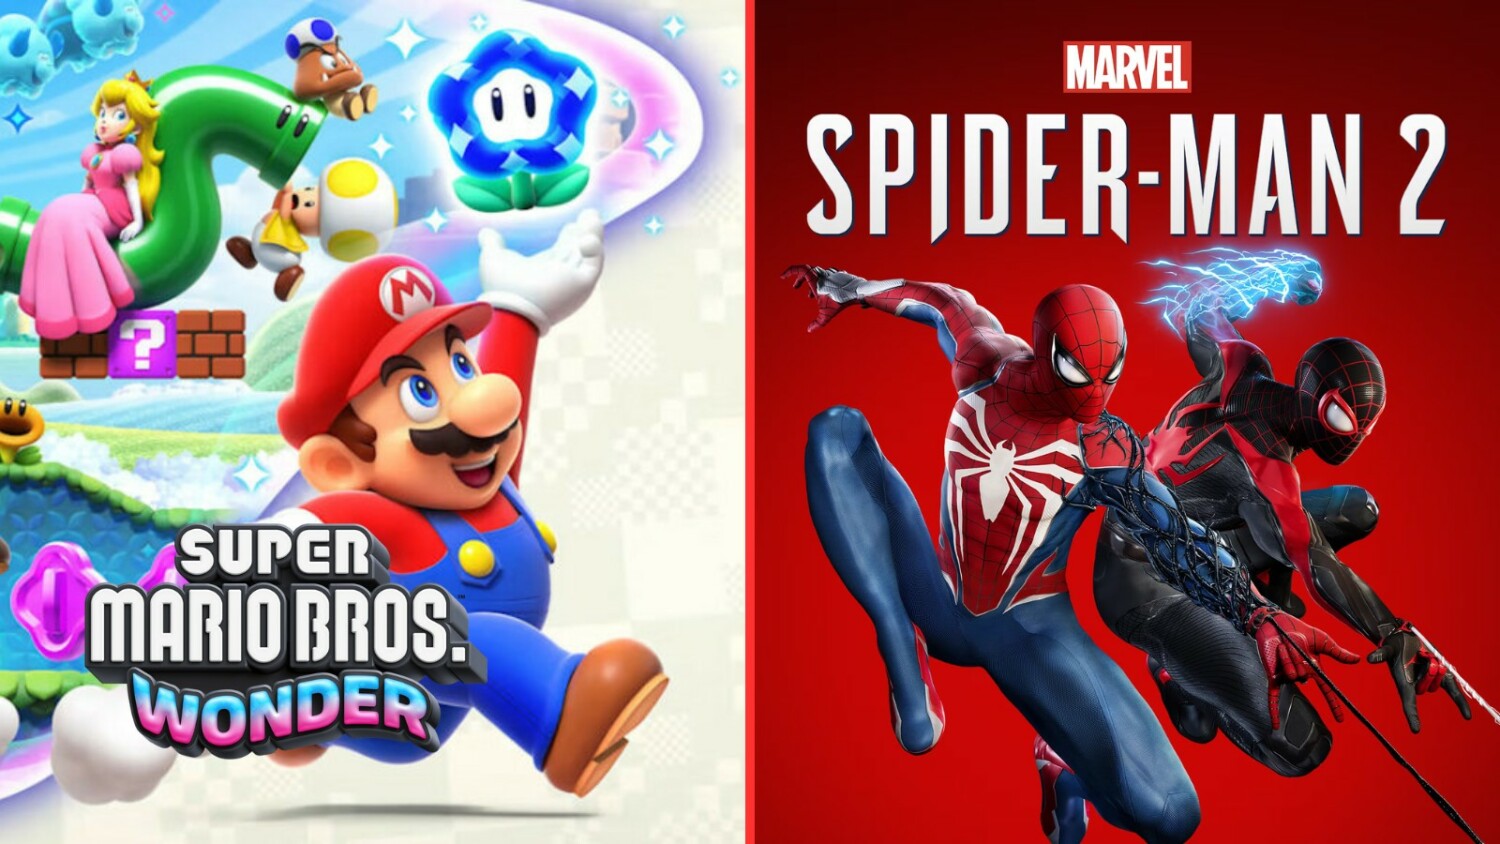 Marvels Spiderman 2 VS Super Mario Bros Wonder!? Which is the